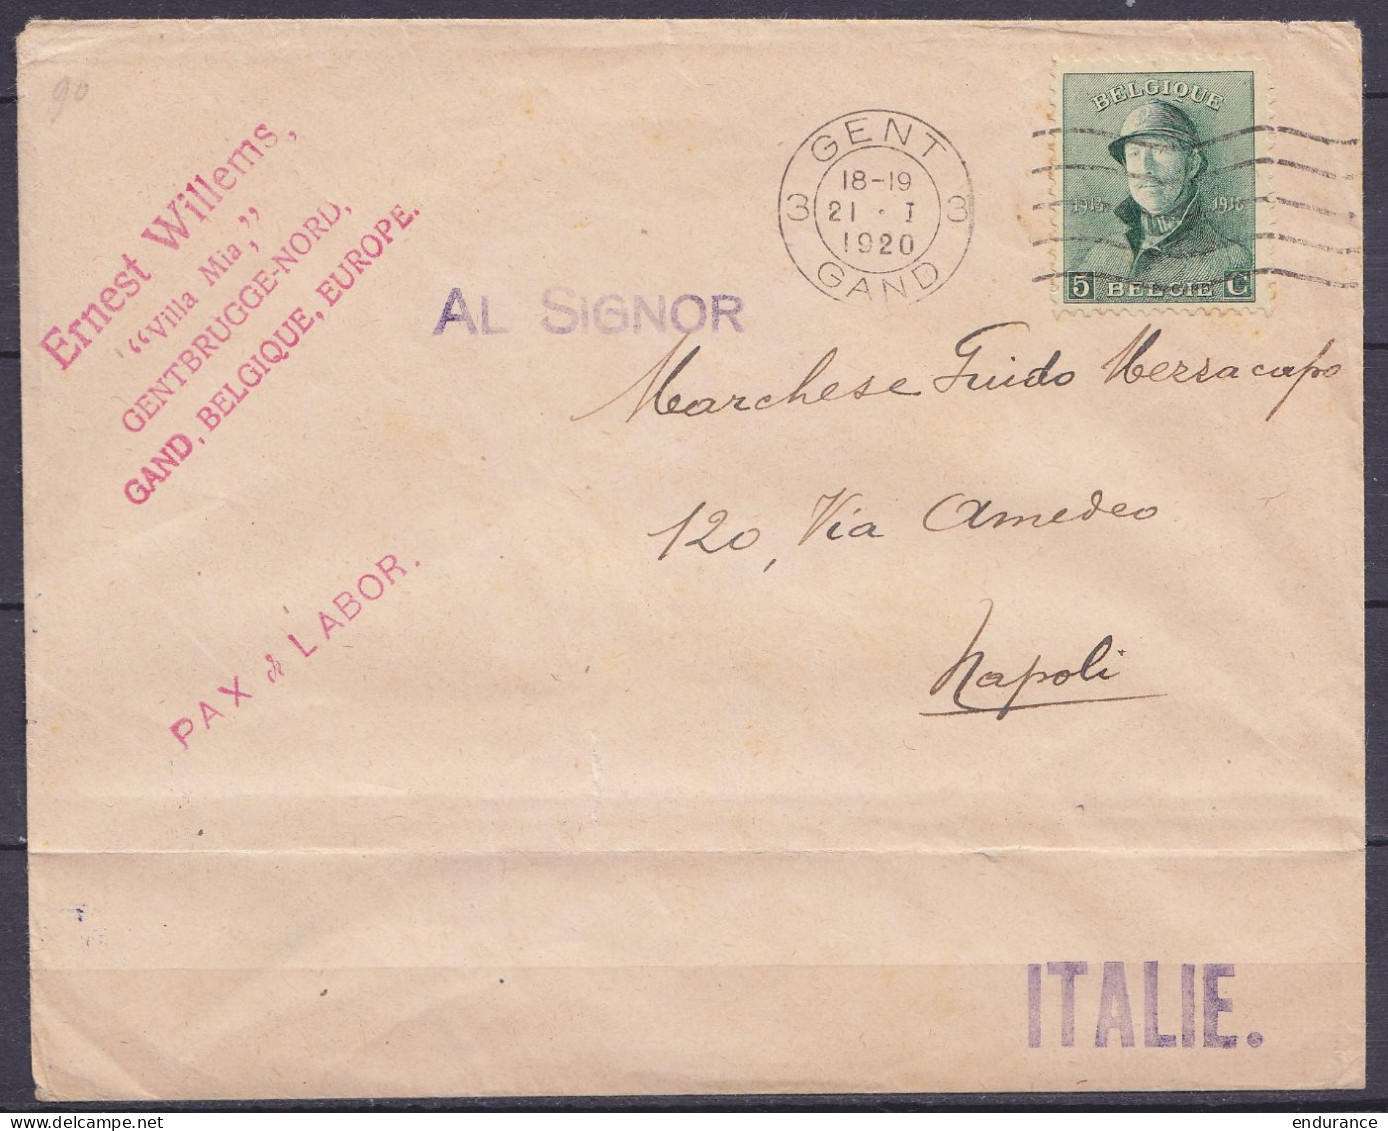 Env. Affr. N°167 (tarif Imprimés) Flam. "GENT 3/12.I 1920/ GAND 3" Pour NAPOLI (Naples) Italie - 1919-1920 Albert Met Helm